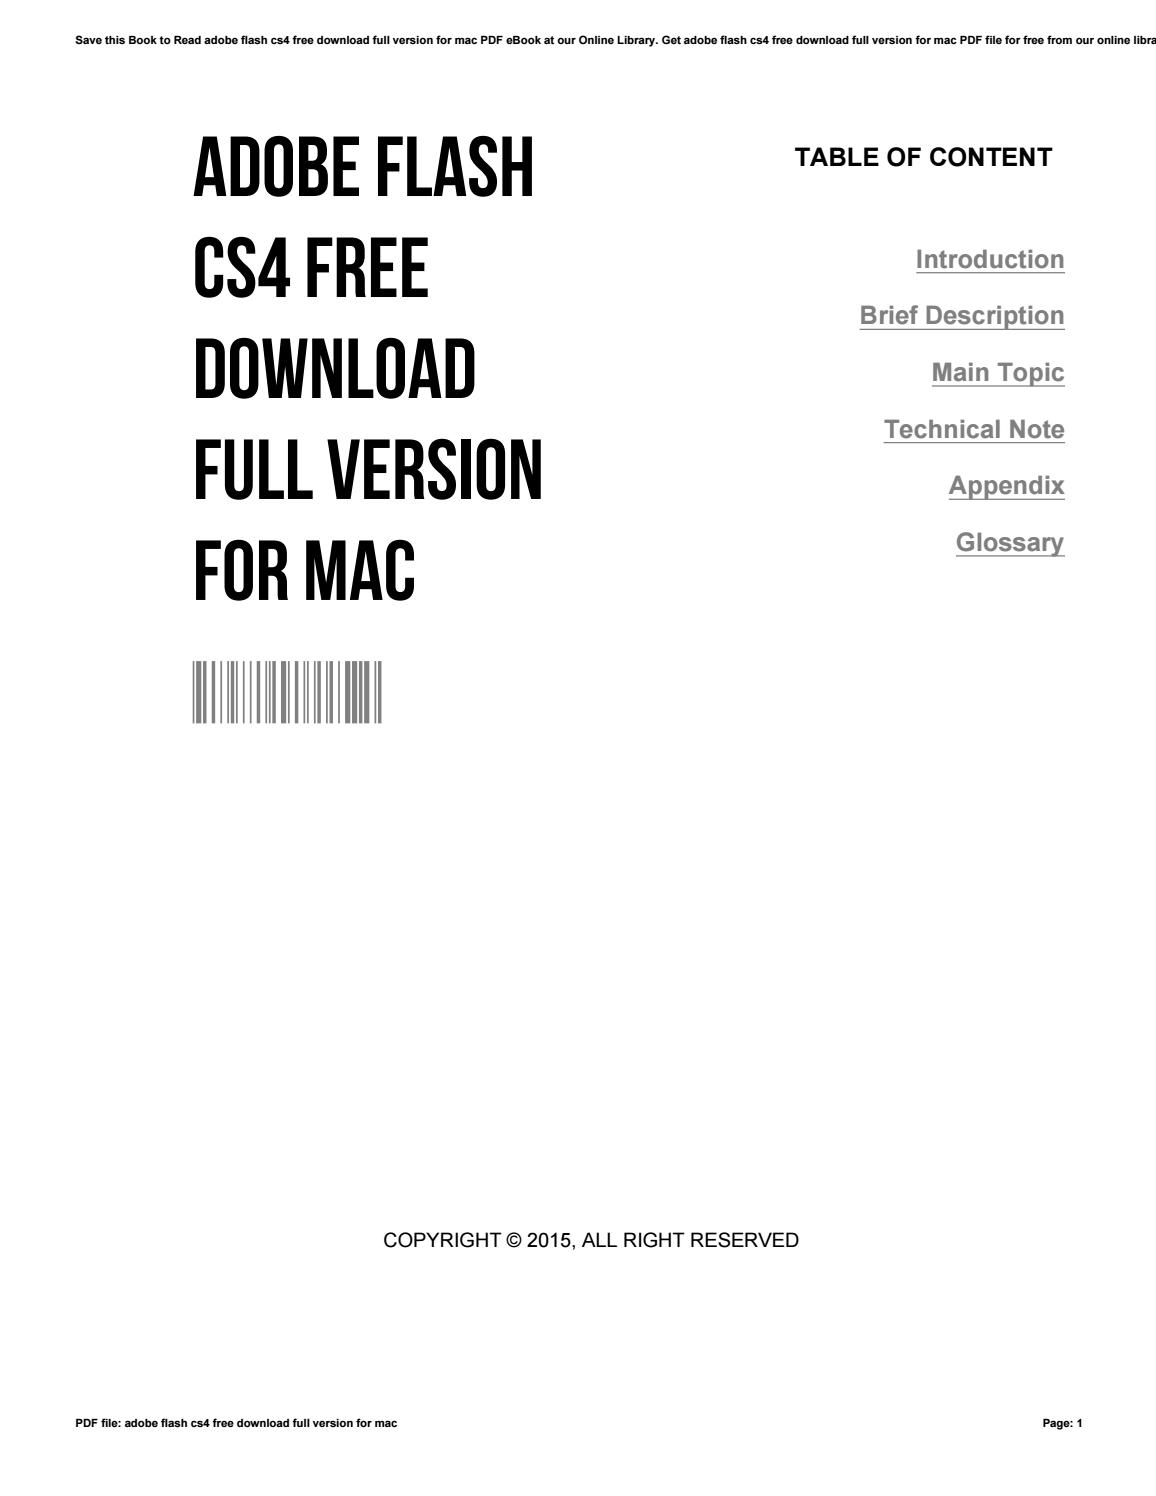 Photoshop cs4 portable mac free download